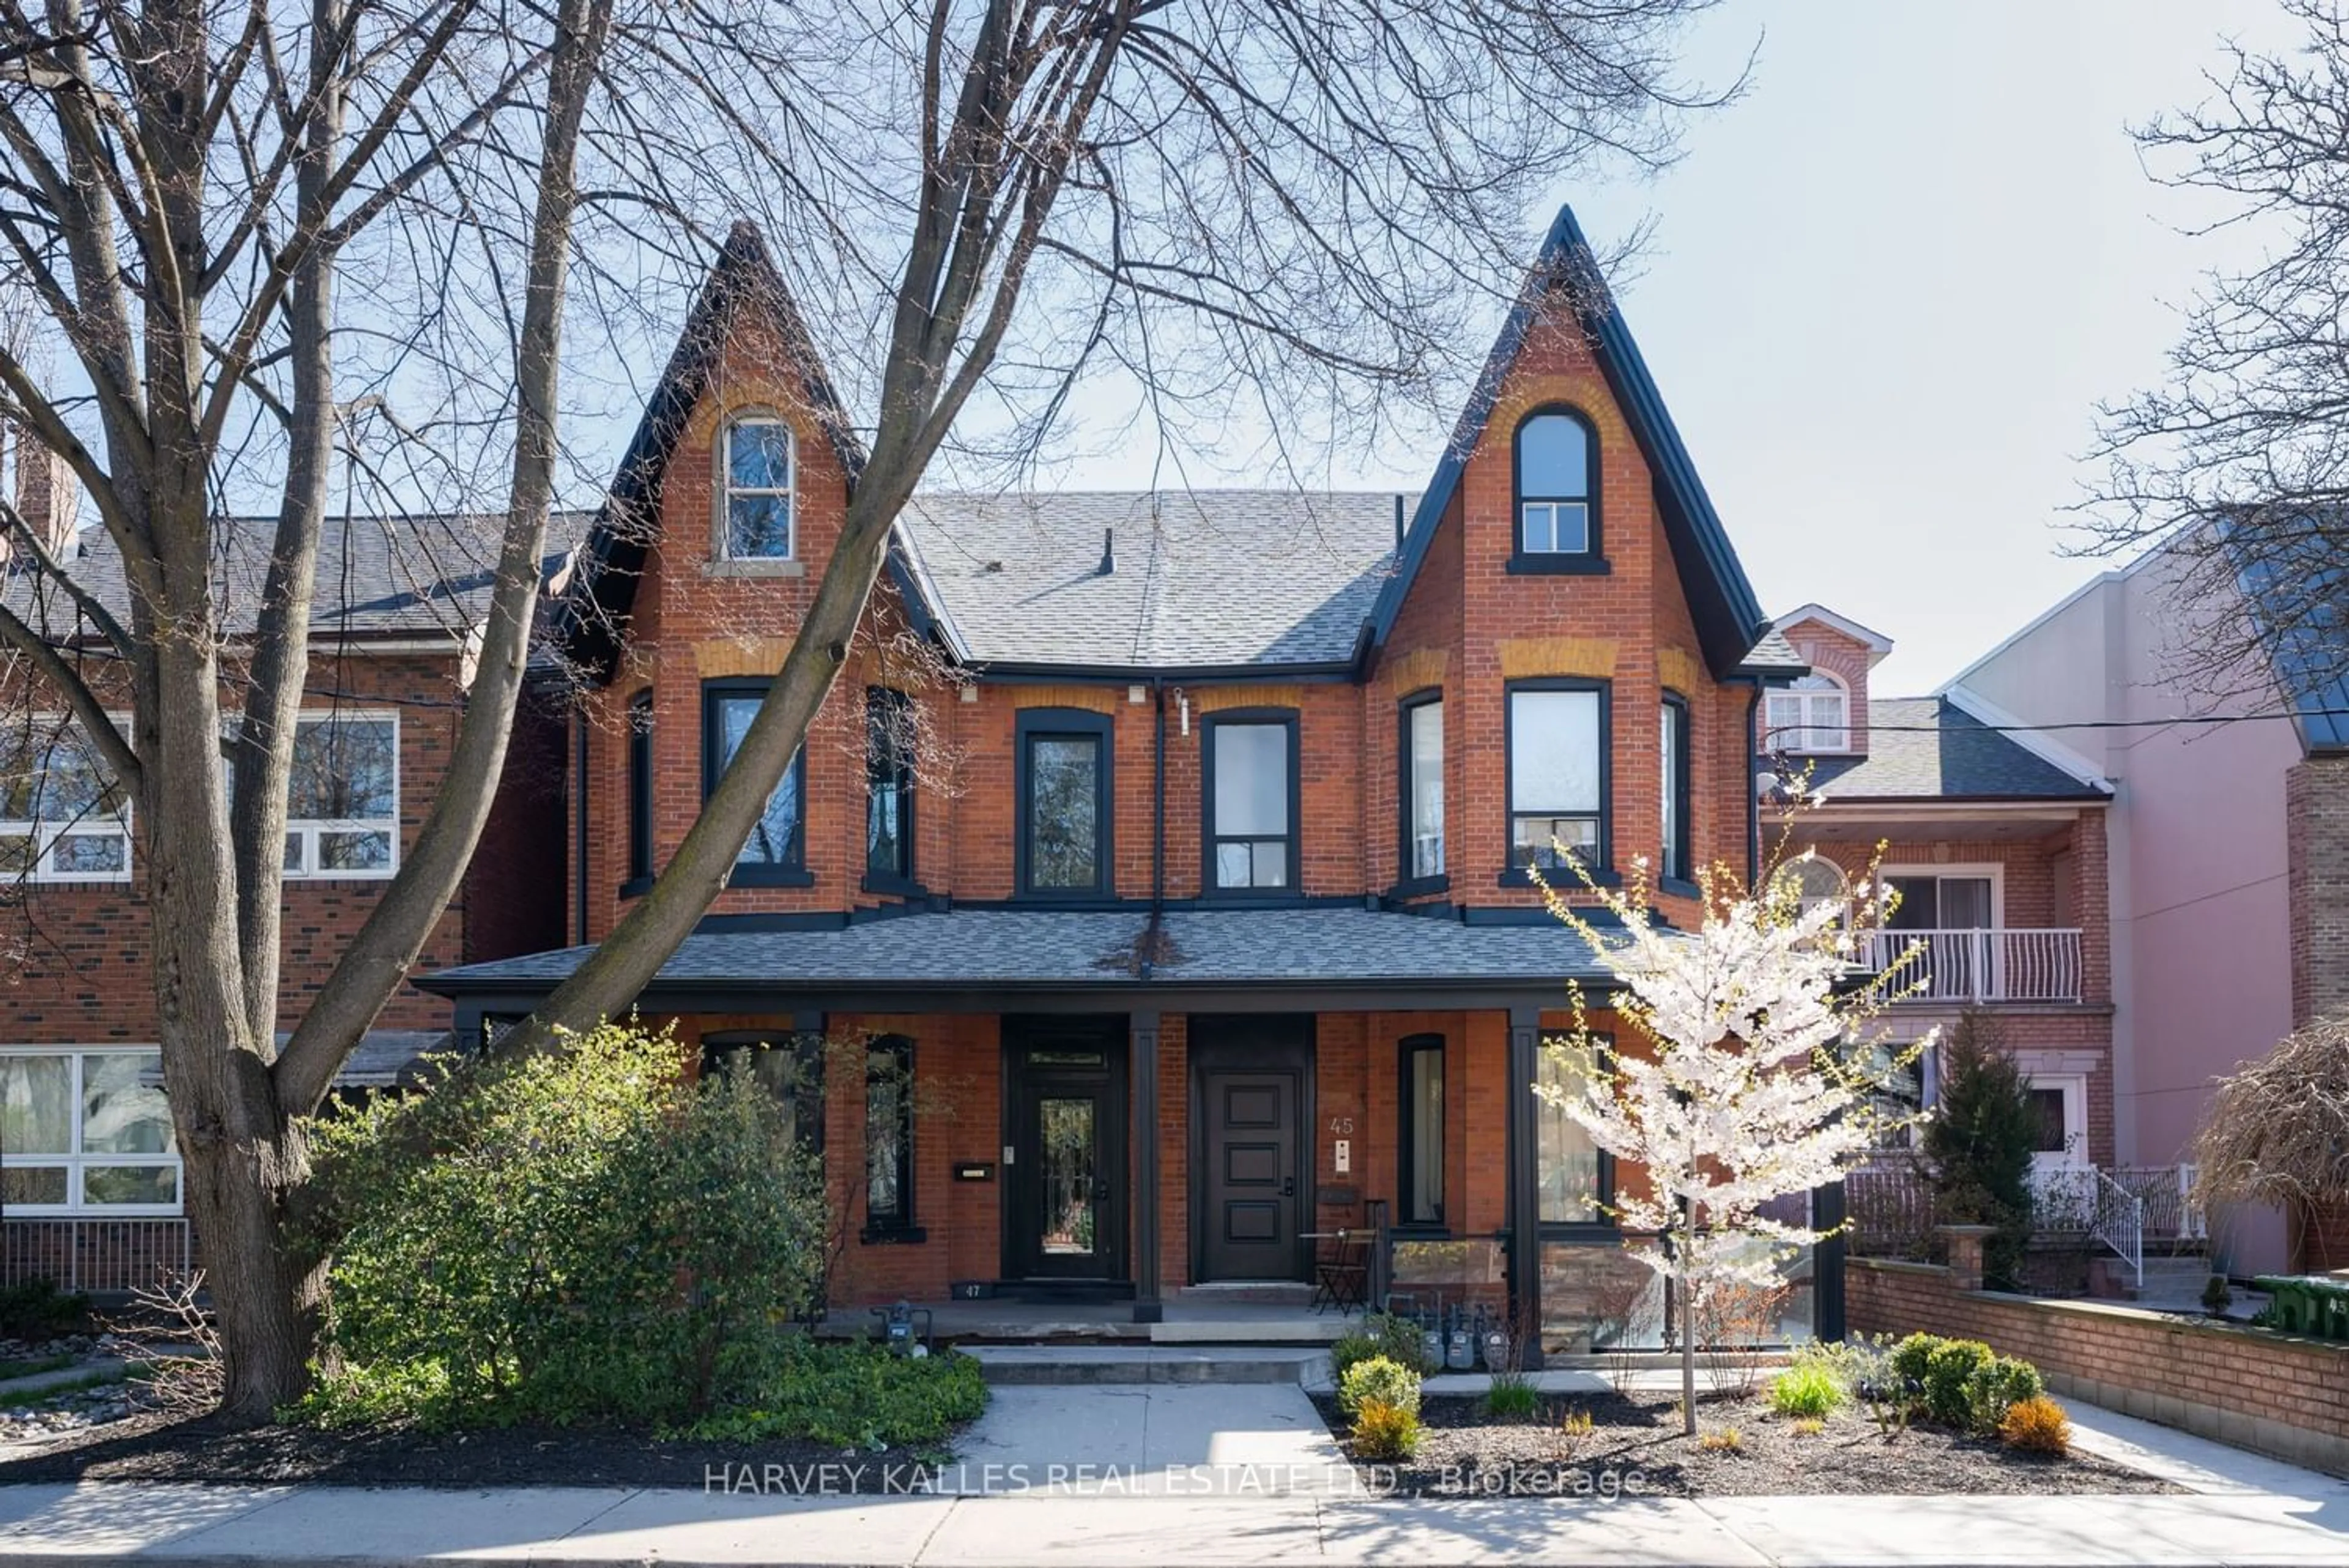 Home with brick exterior material for 47 Northcote Ave, Toronto Ontario M6J 3K2